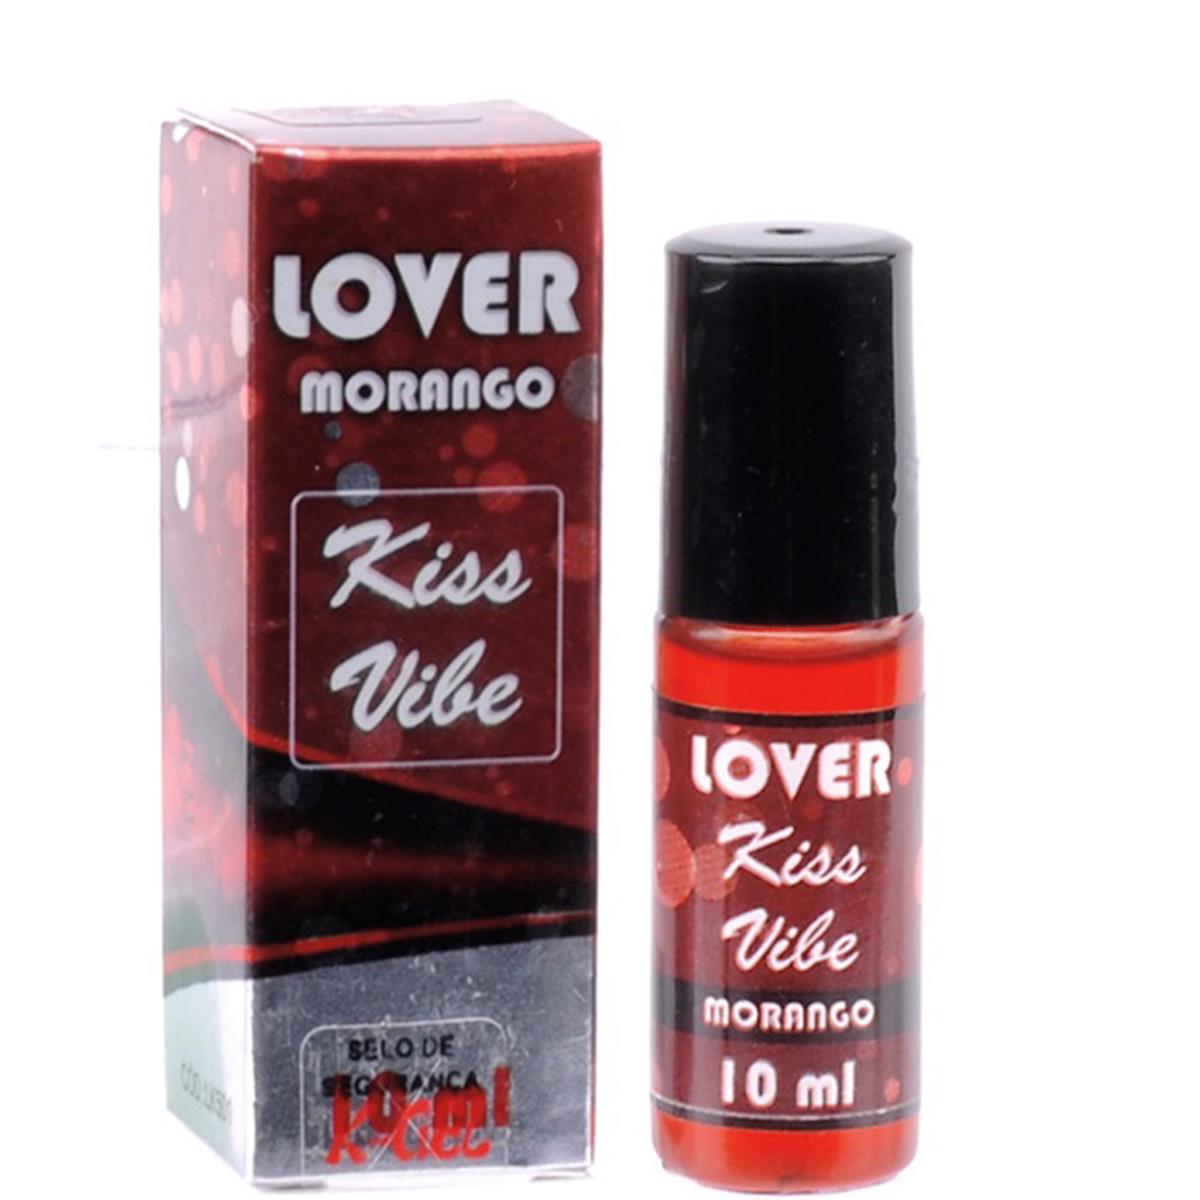 Kiss Vibe Lover Morango 10ml K-gel - Miess